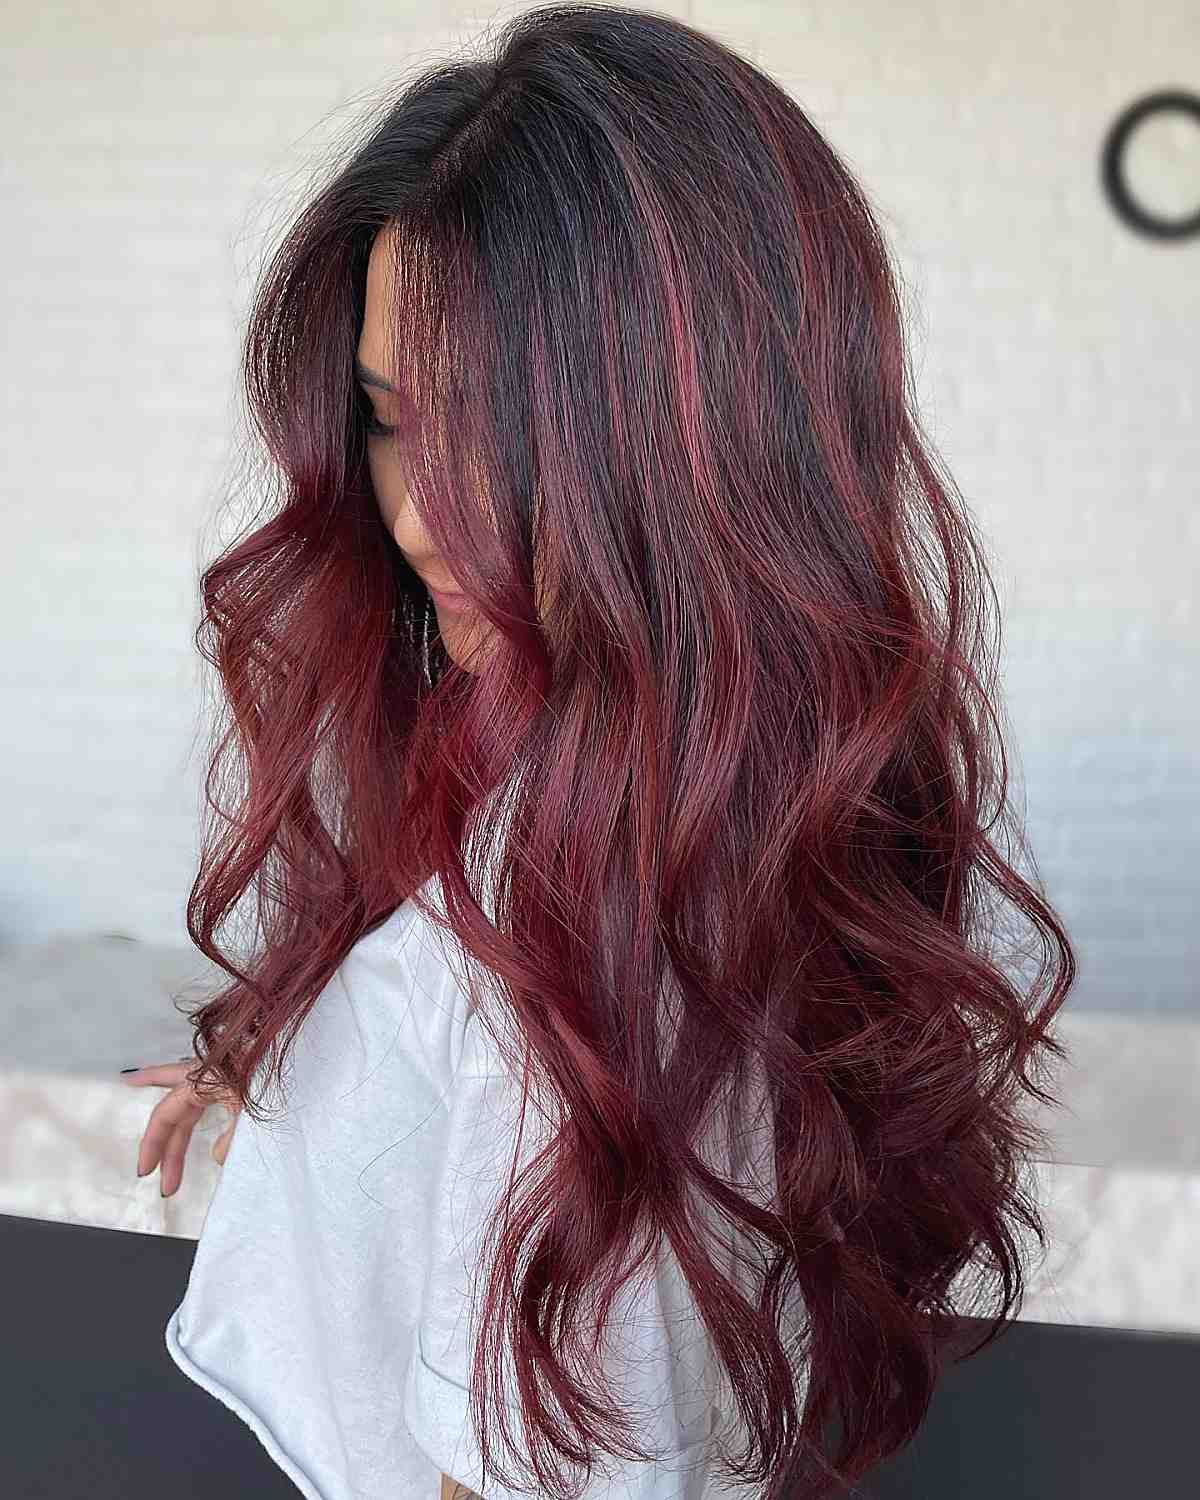 Revlon Colorsilk Beautiful Hair Color - 32 Mahogany Brown